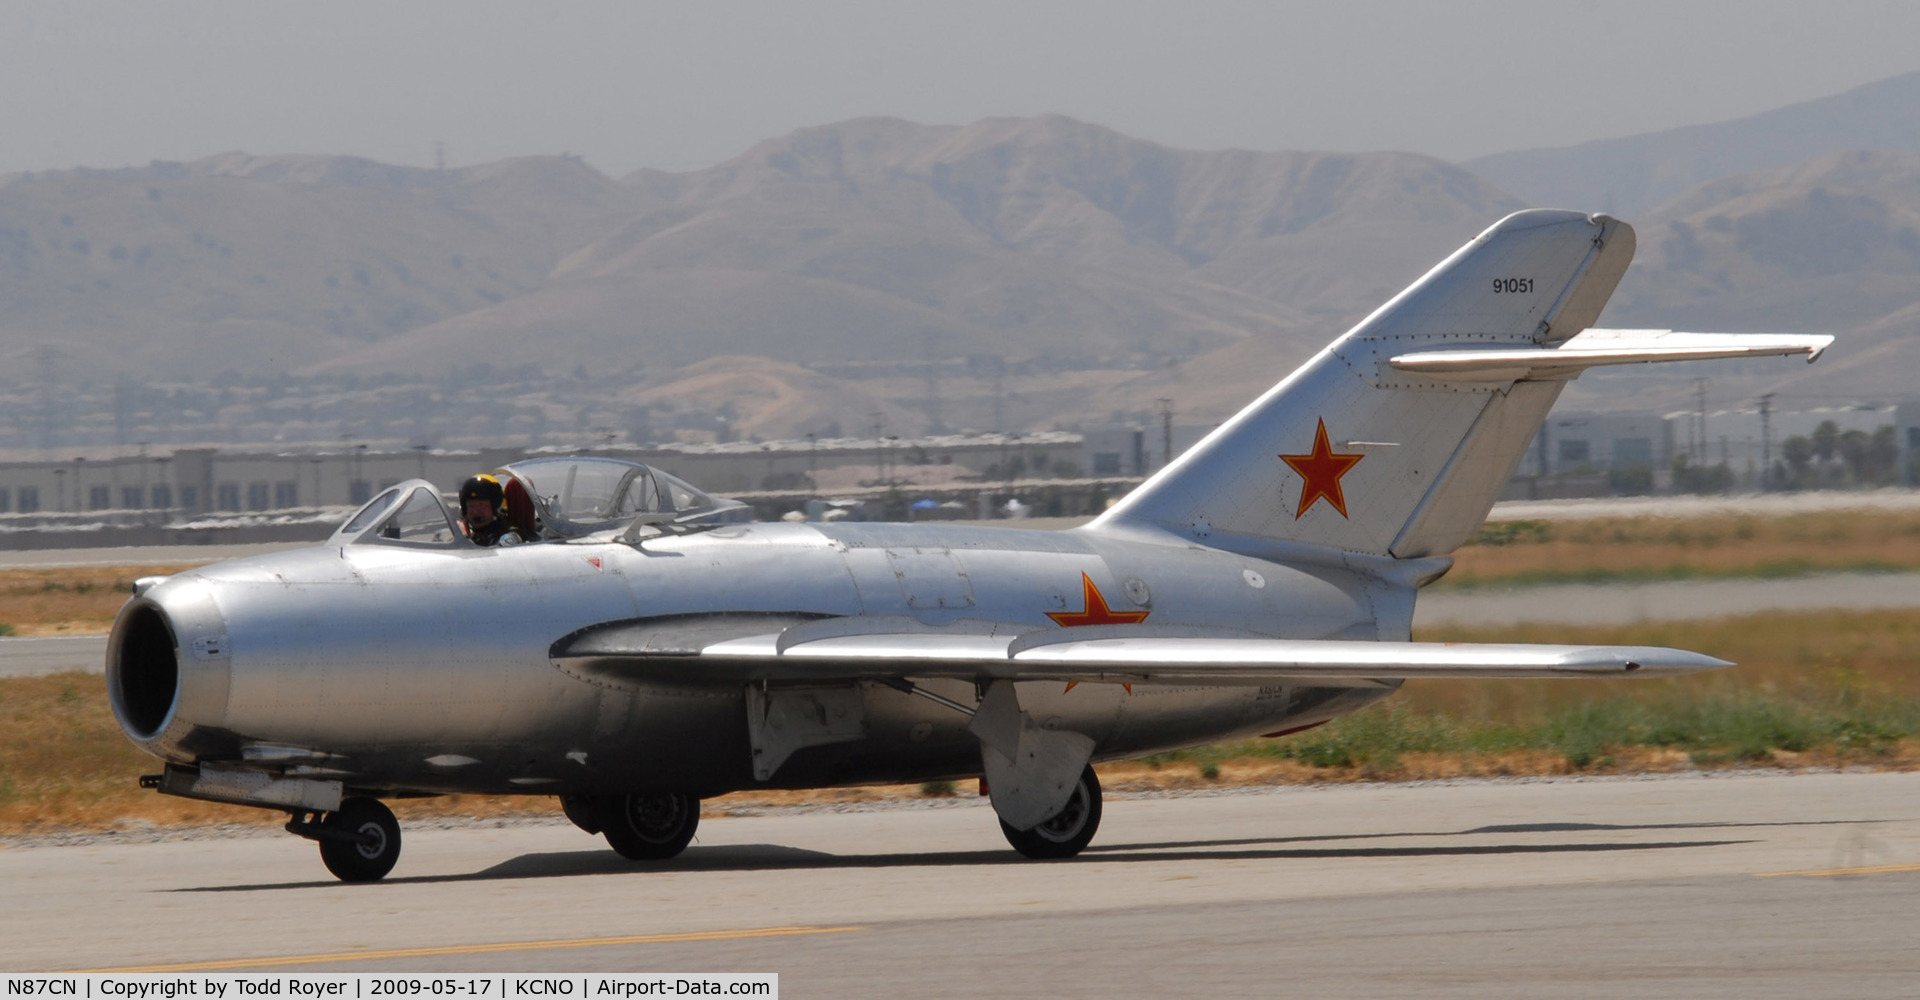 N87CN, Mikoyan-Gurevich MiG-15 C/N 910-51, Chino Airshow 2009